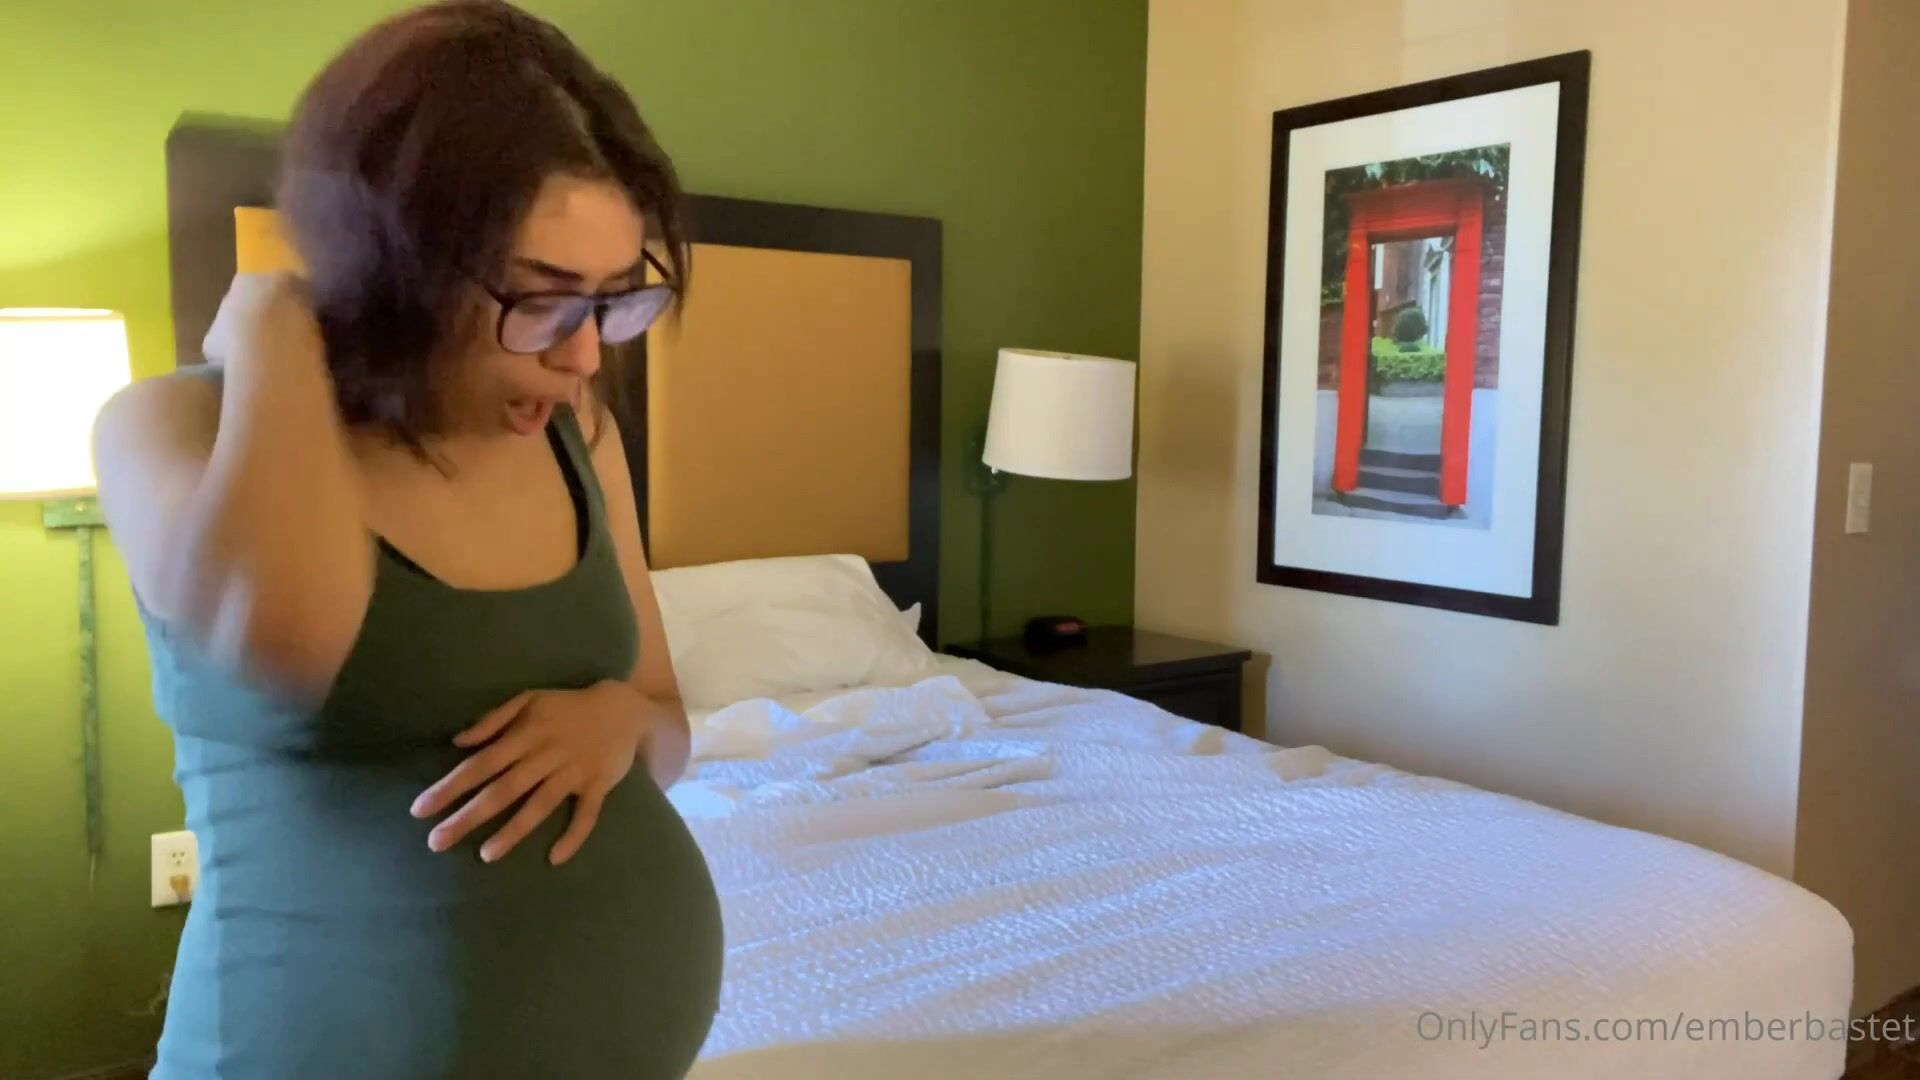 Ember Bastet - Waking up pregnant